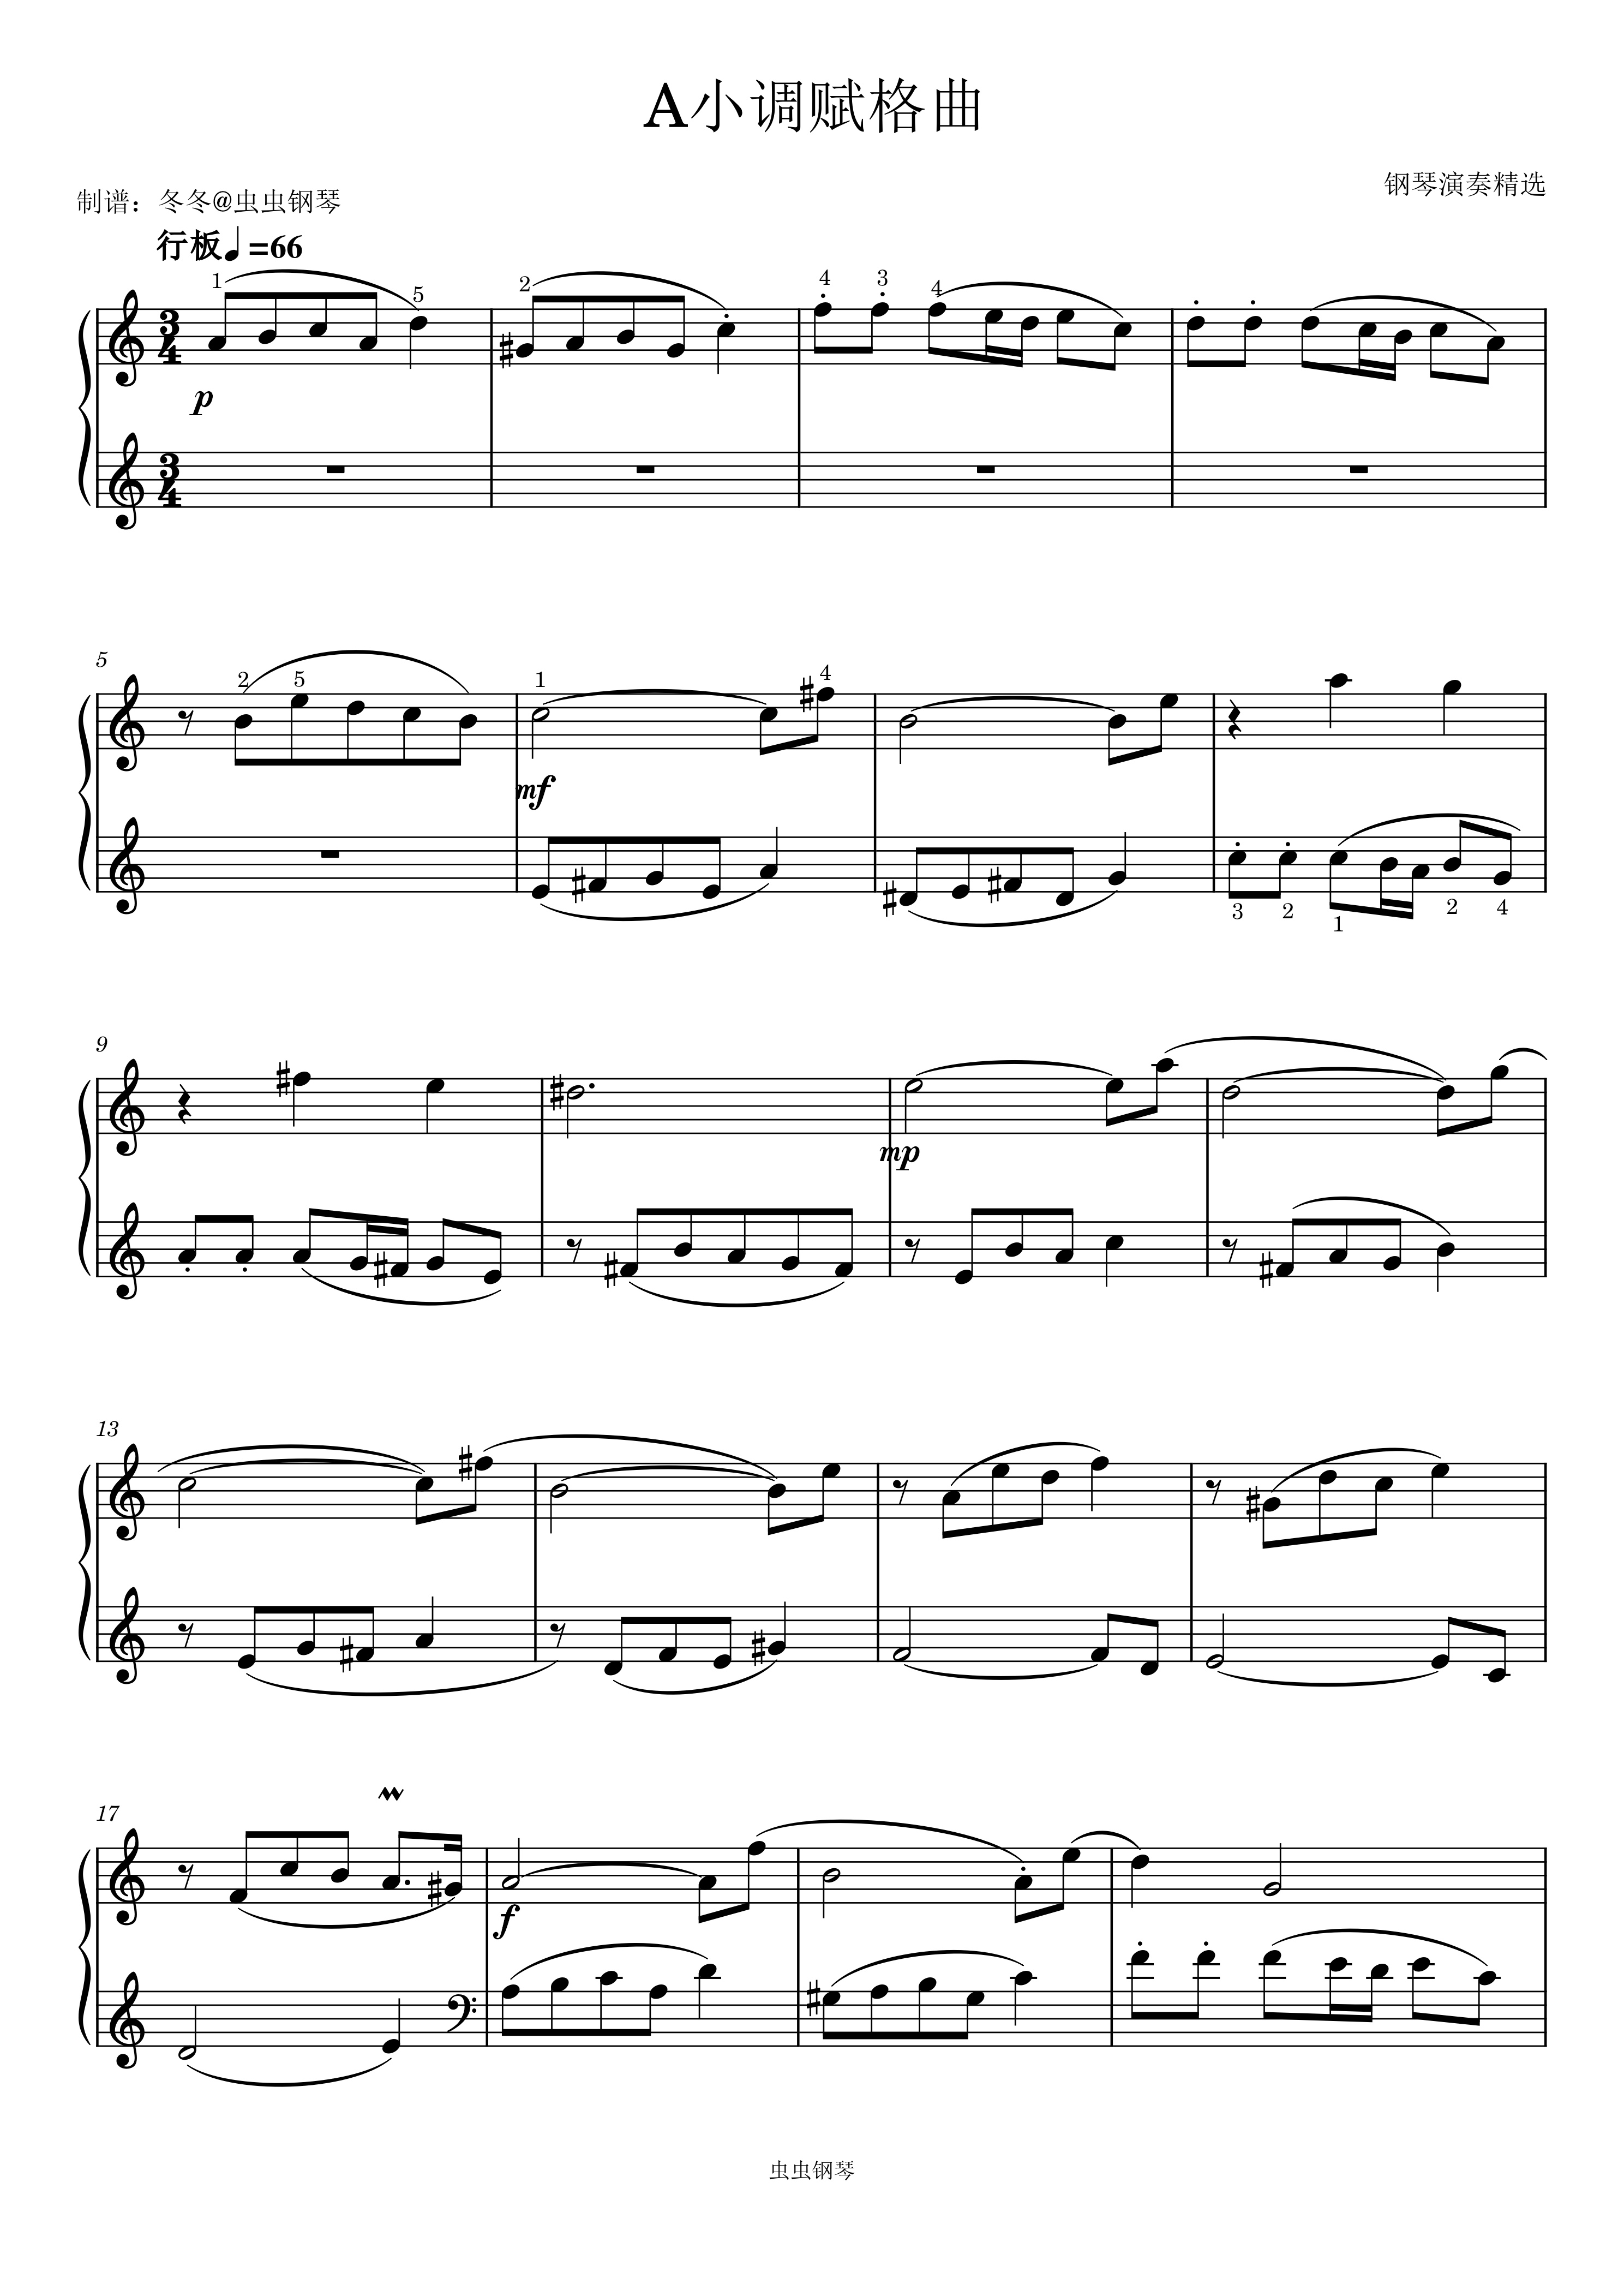 D小调第六首BWV 851《前奏曲》和《赋格》钢琴谱-巴赫-巴赫十二平均律-老齐-虫虫钢琴